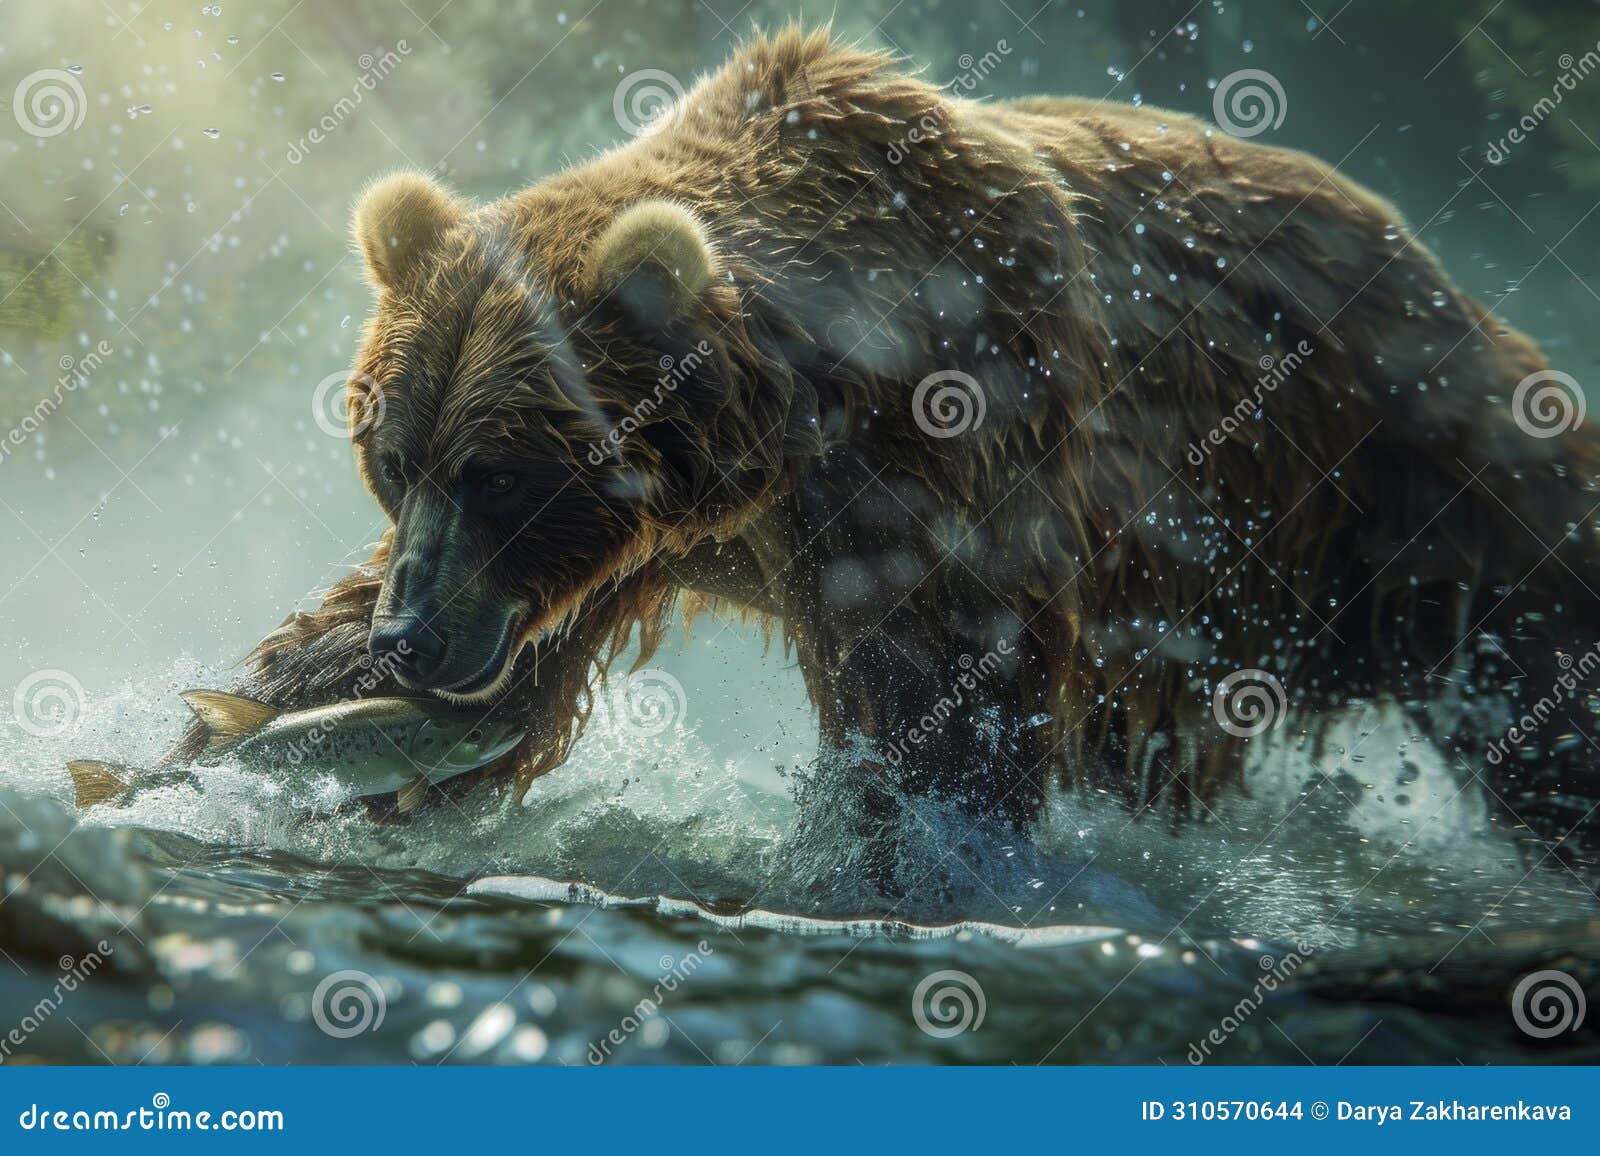 bear catching fish: national geographic shot